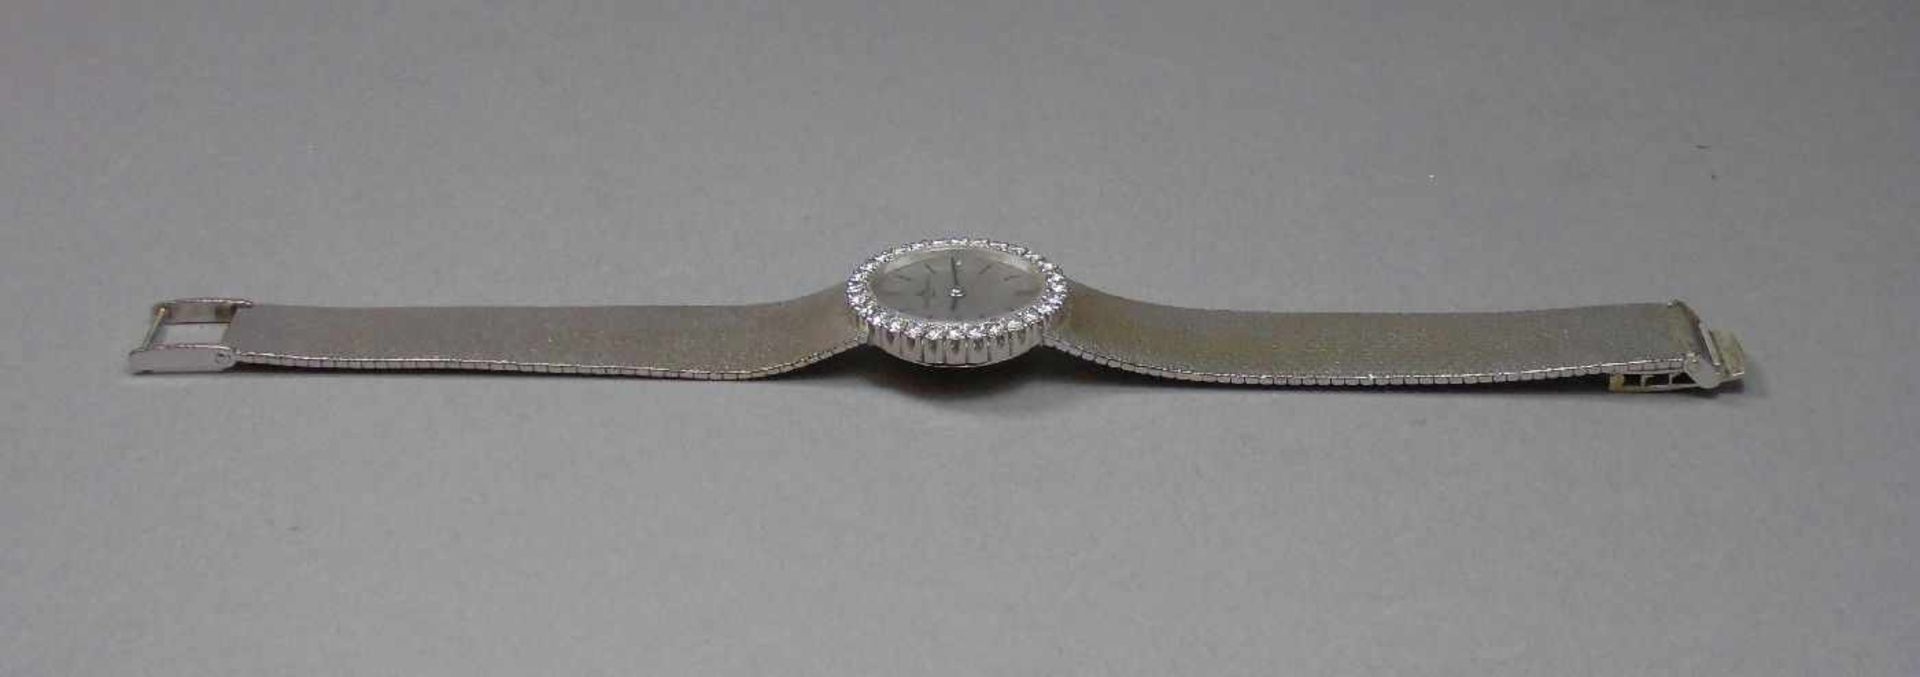 VINTAGE WEISSGOLD-ARMBANDUHR - BAUME & MERCIER GENEVE / wristwatch, Handaufzug, Manufaktur Baume & - Image 5 of 11